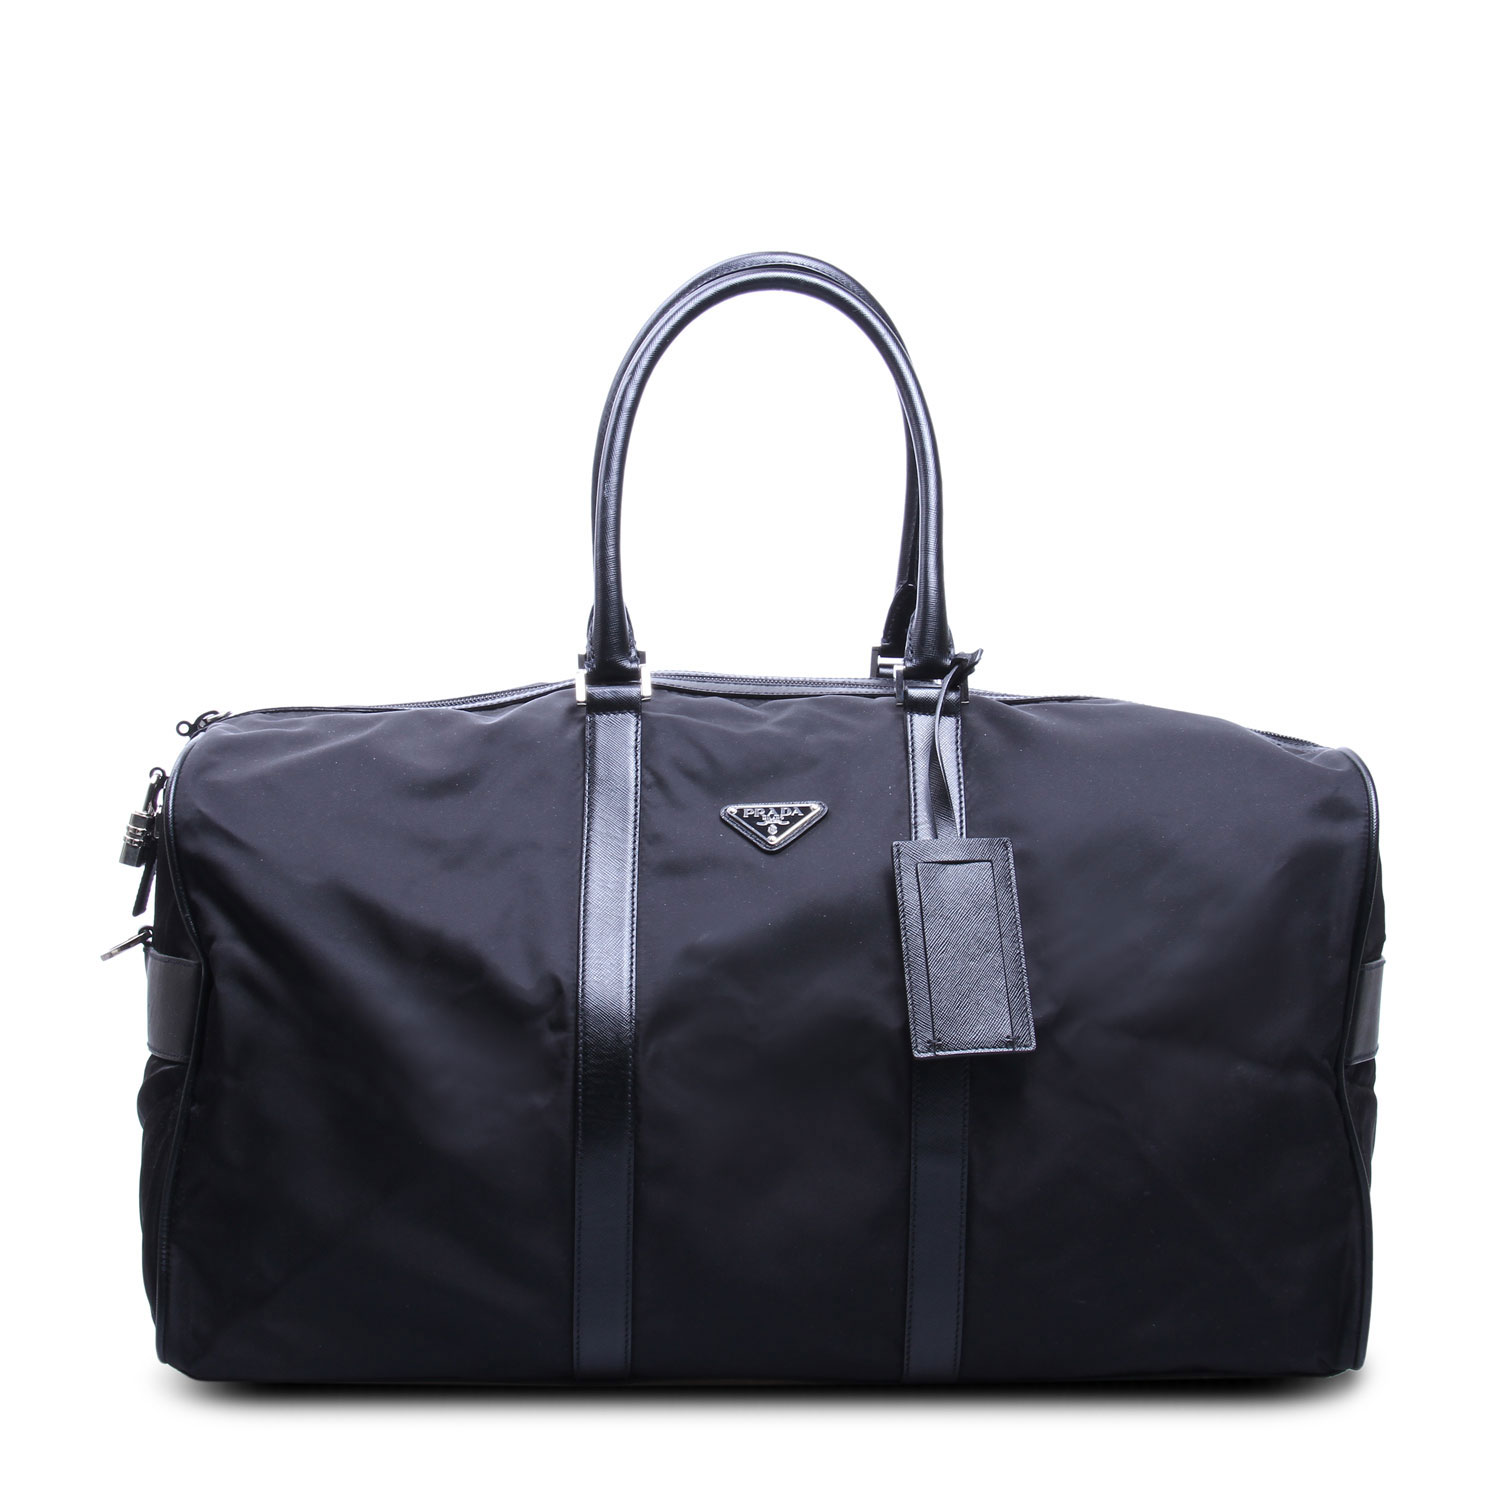 LV枕头包旅行袋 大号棕色 LV包包经典款图片 - 七七奢侈品